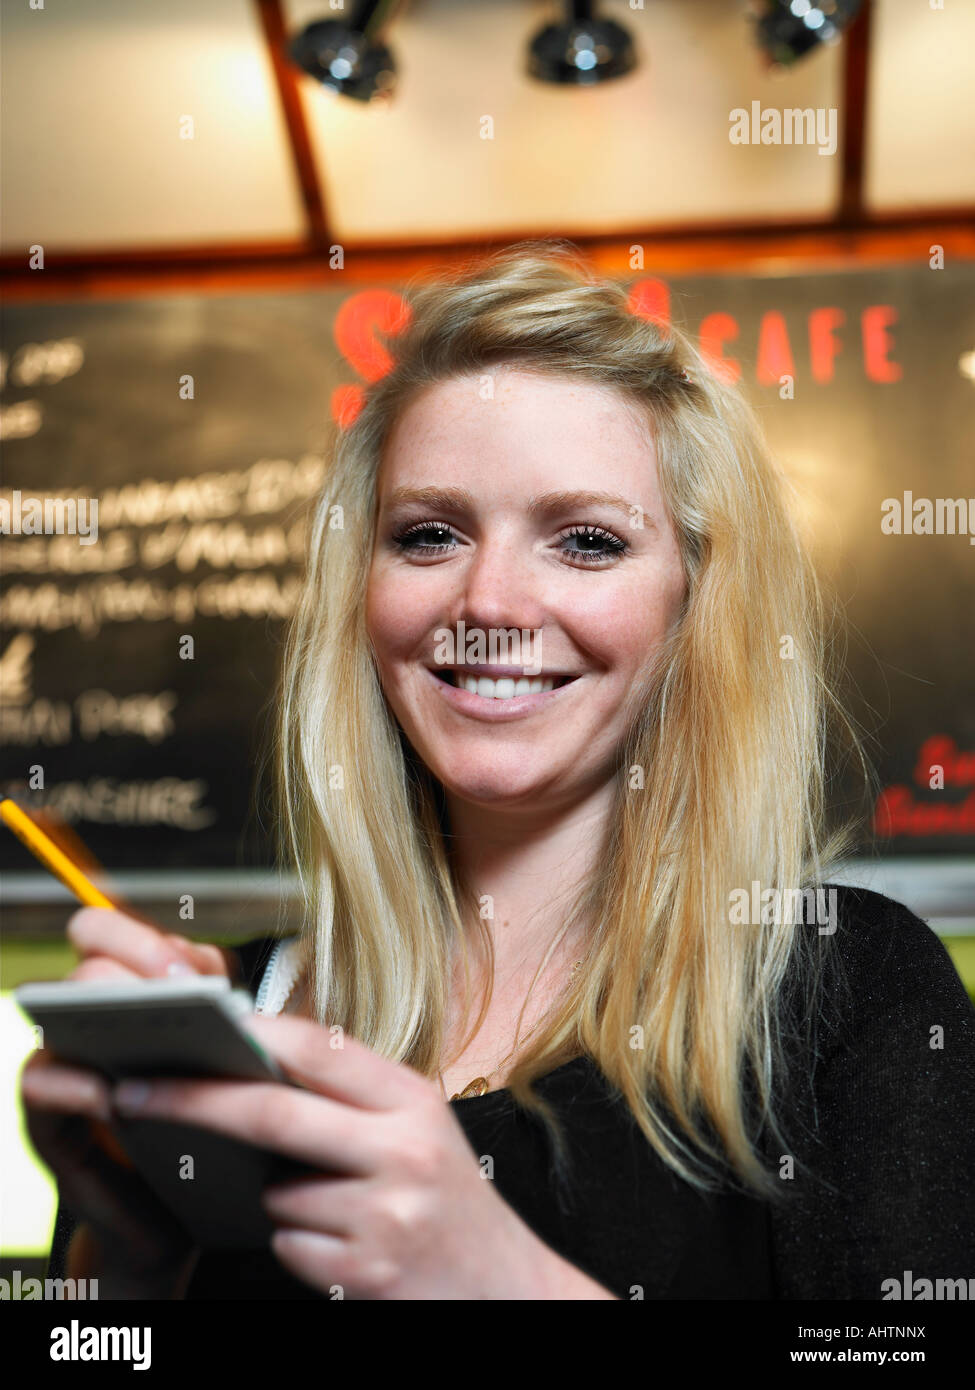 Young waitress holding notepad dans cafe, smiling, portrait Banque D'Images